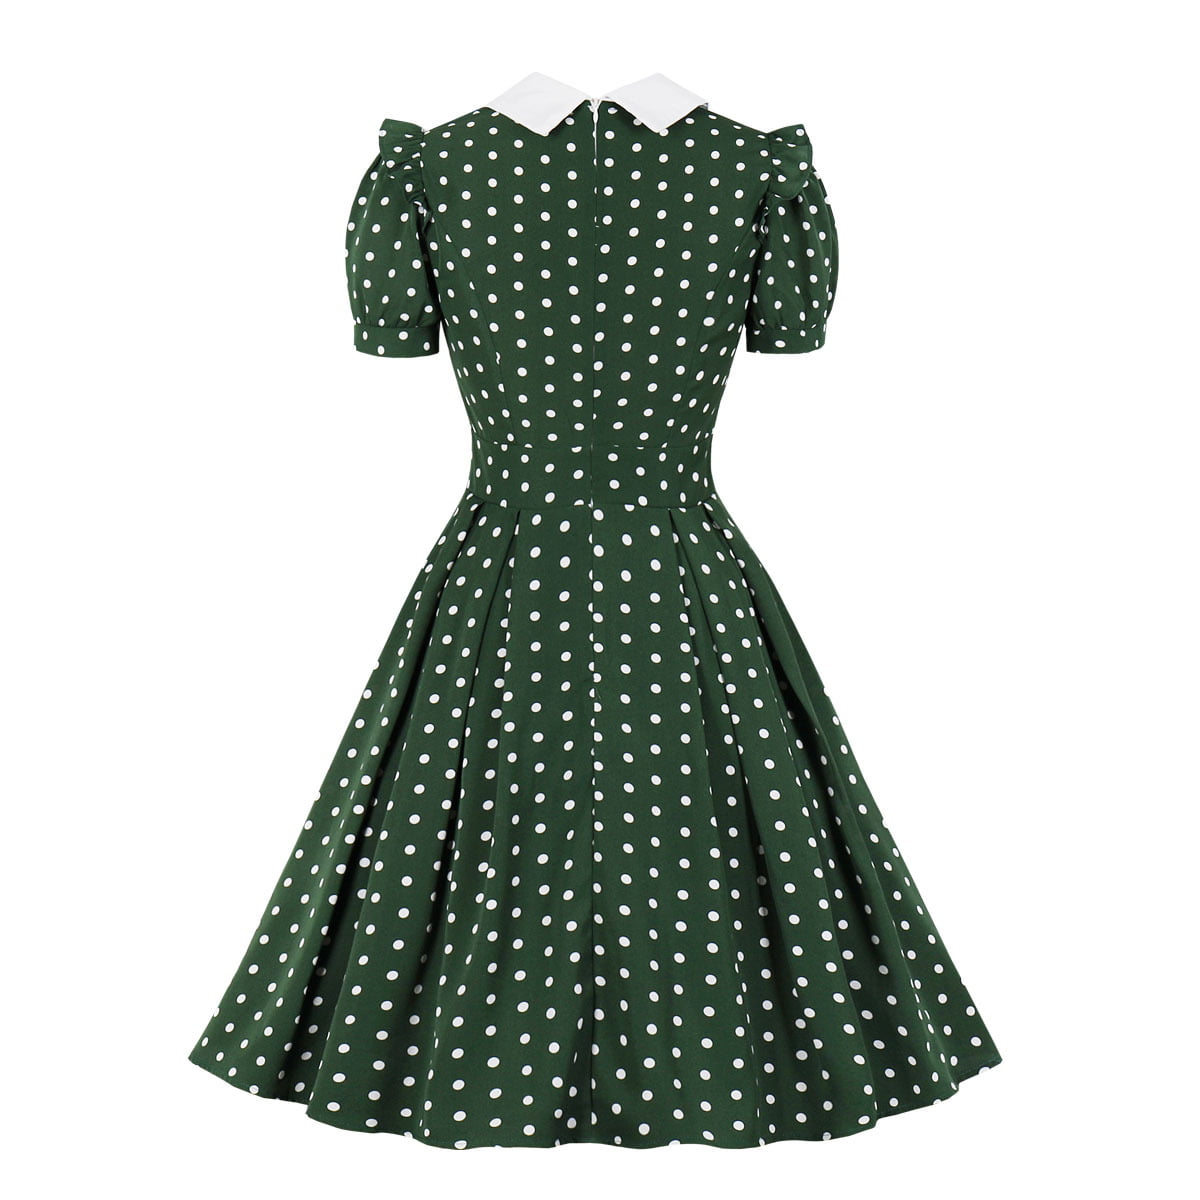 1950s Dresses Retro Polka Dot A Line Swing Dress - Vintage-Retro